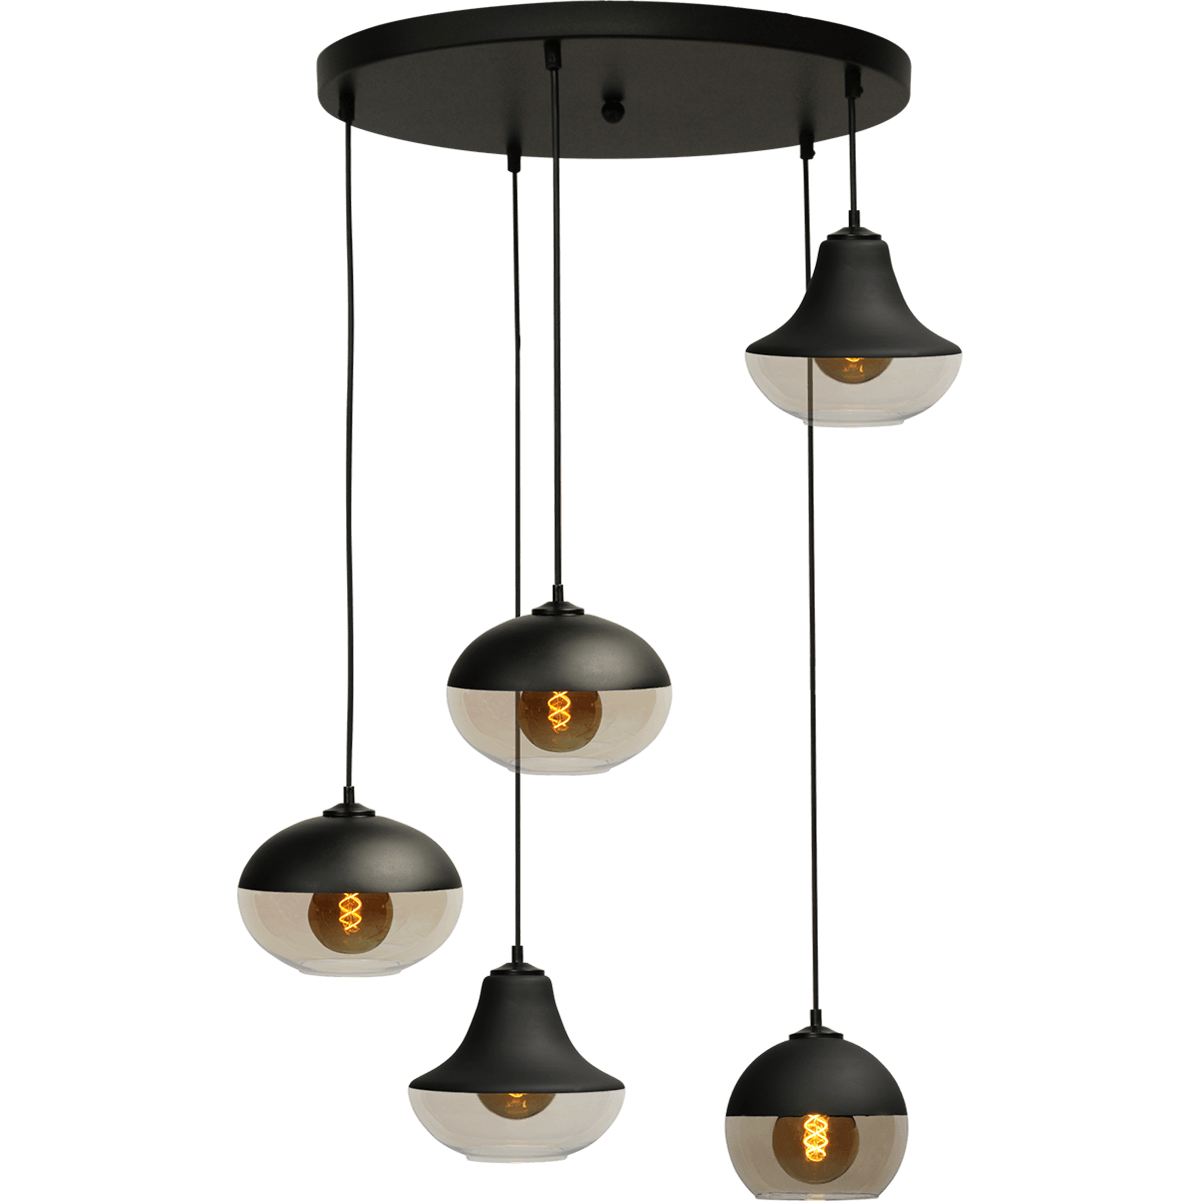 Hanglamp Opaco 5-lichts mat zwart base Ø50cm glas smoke 2x 62270-05-1 + 2x 62270-05-5+ 1x 62270-05-8 - MASTERLIGHT